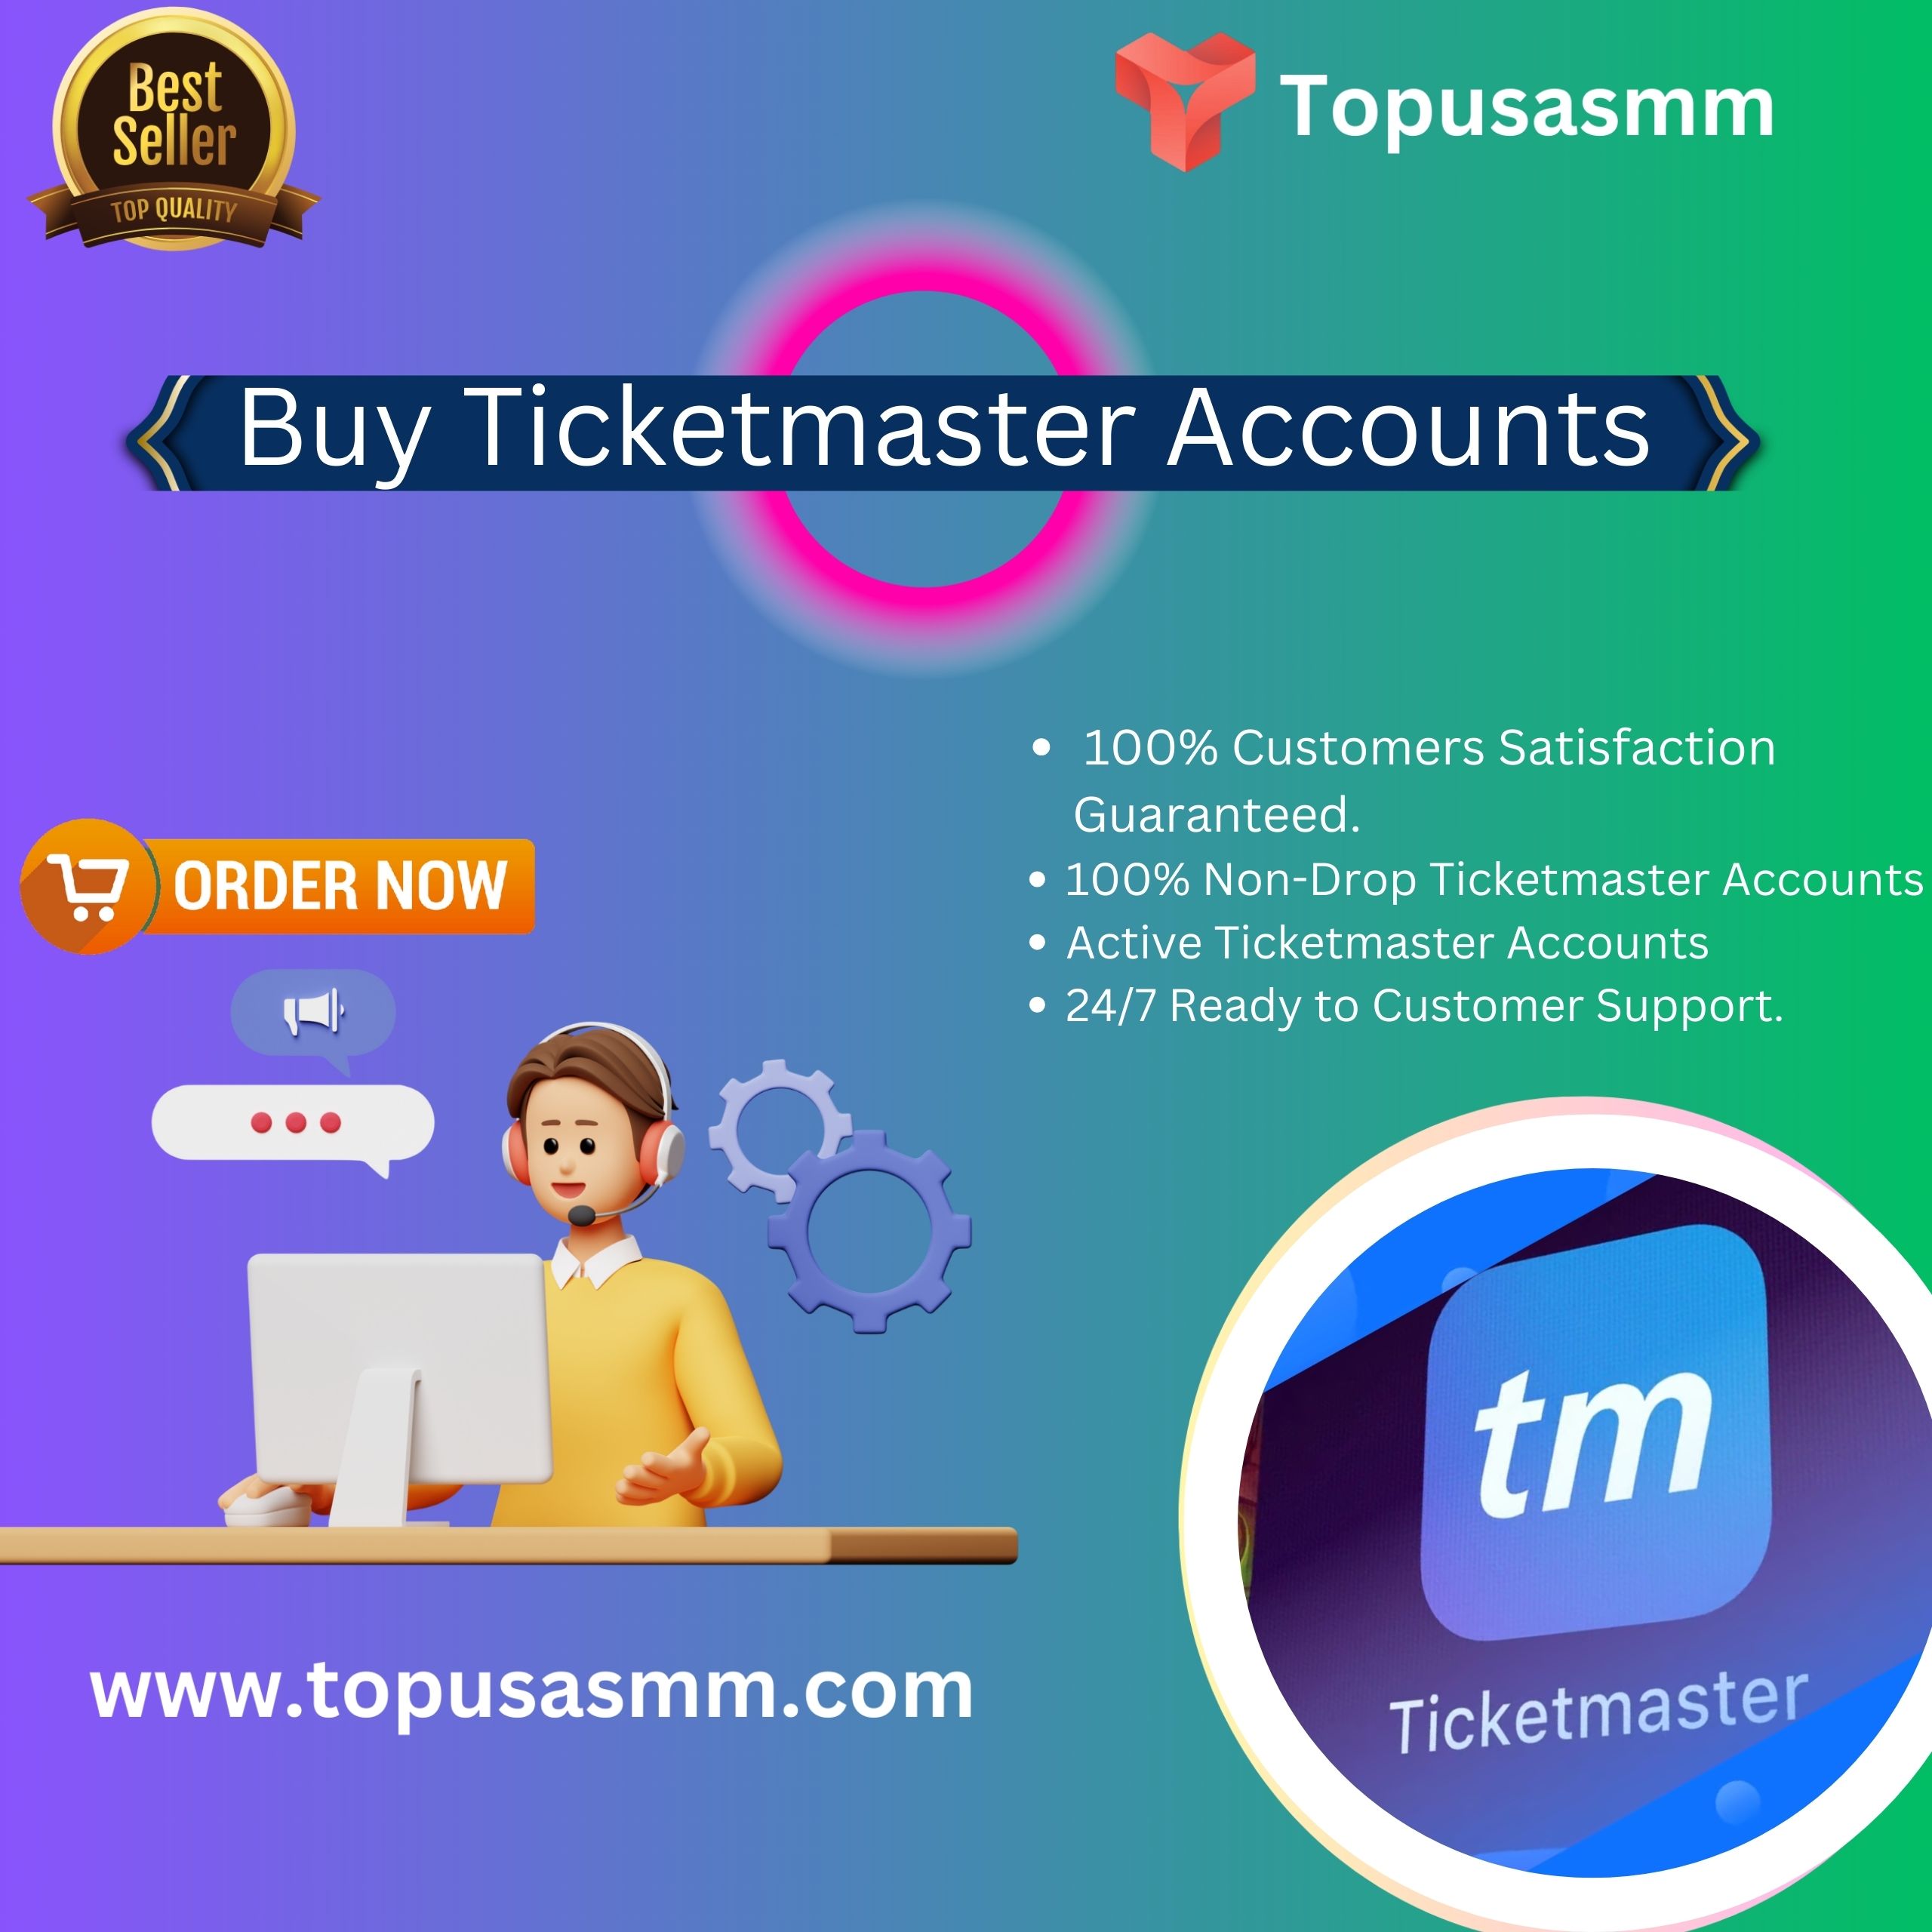 Buy Ticketmaster Accounts - Top USA SMM